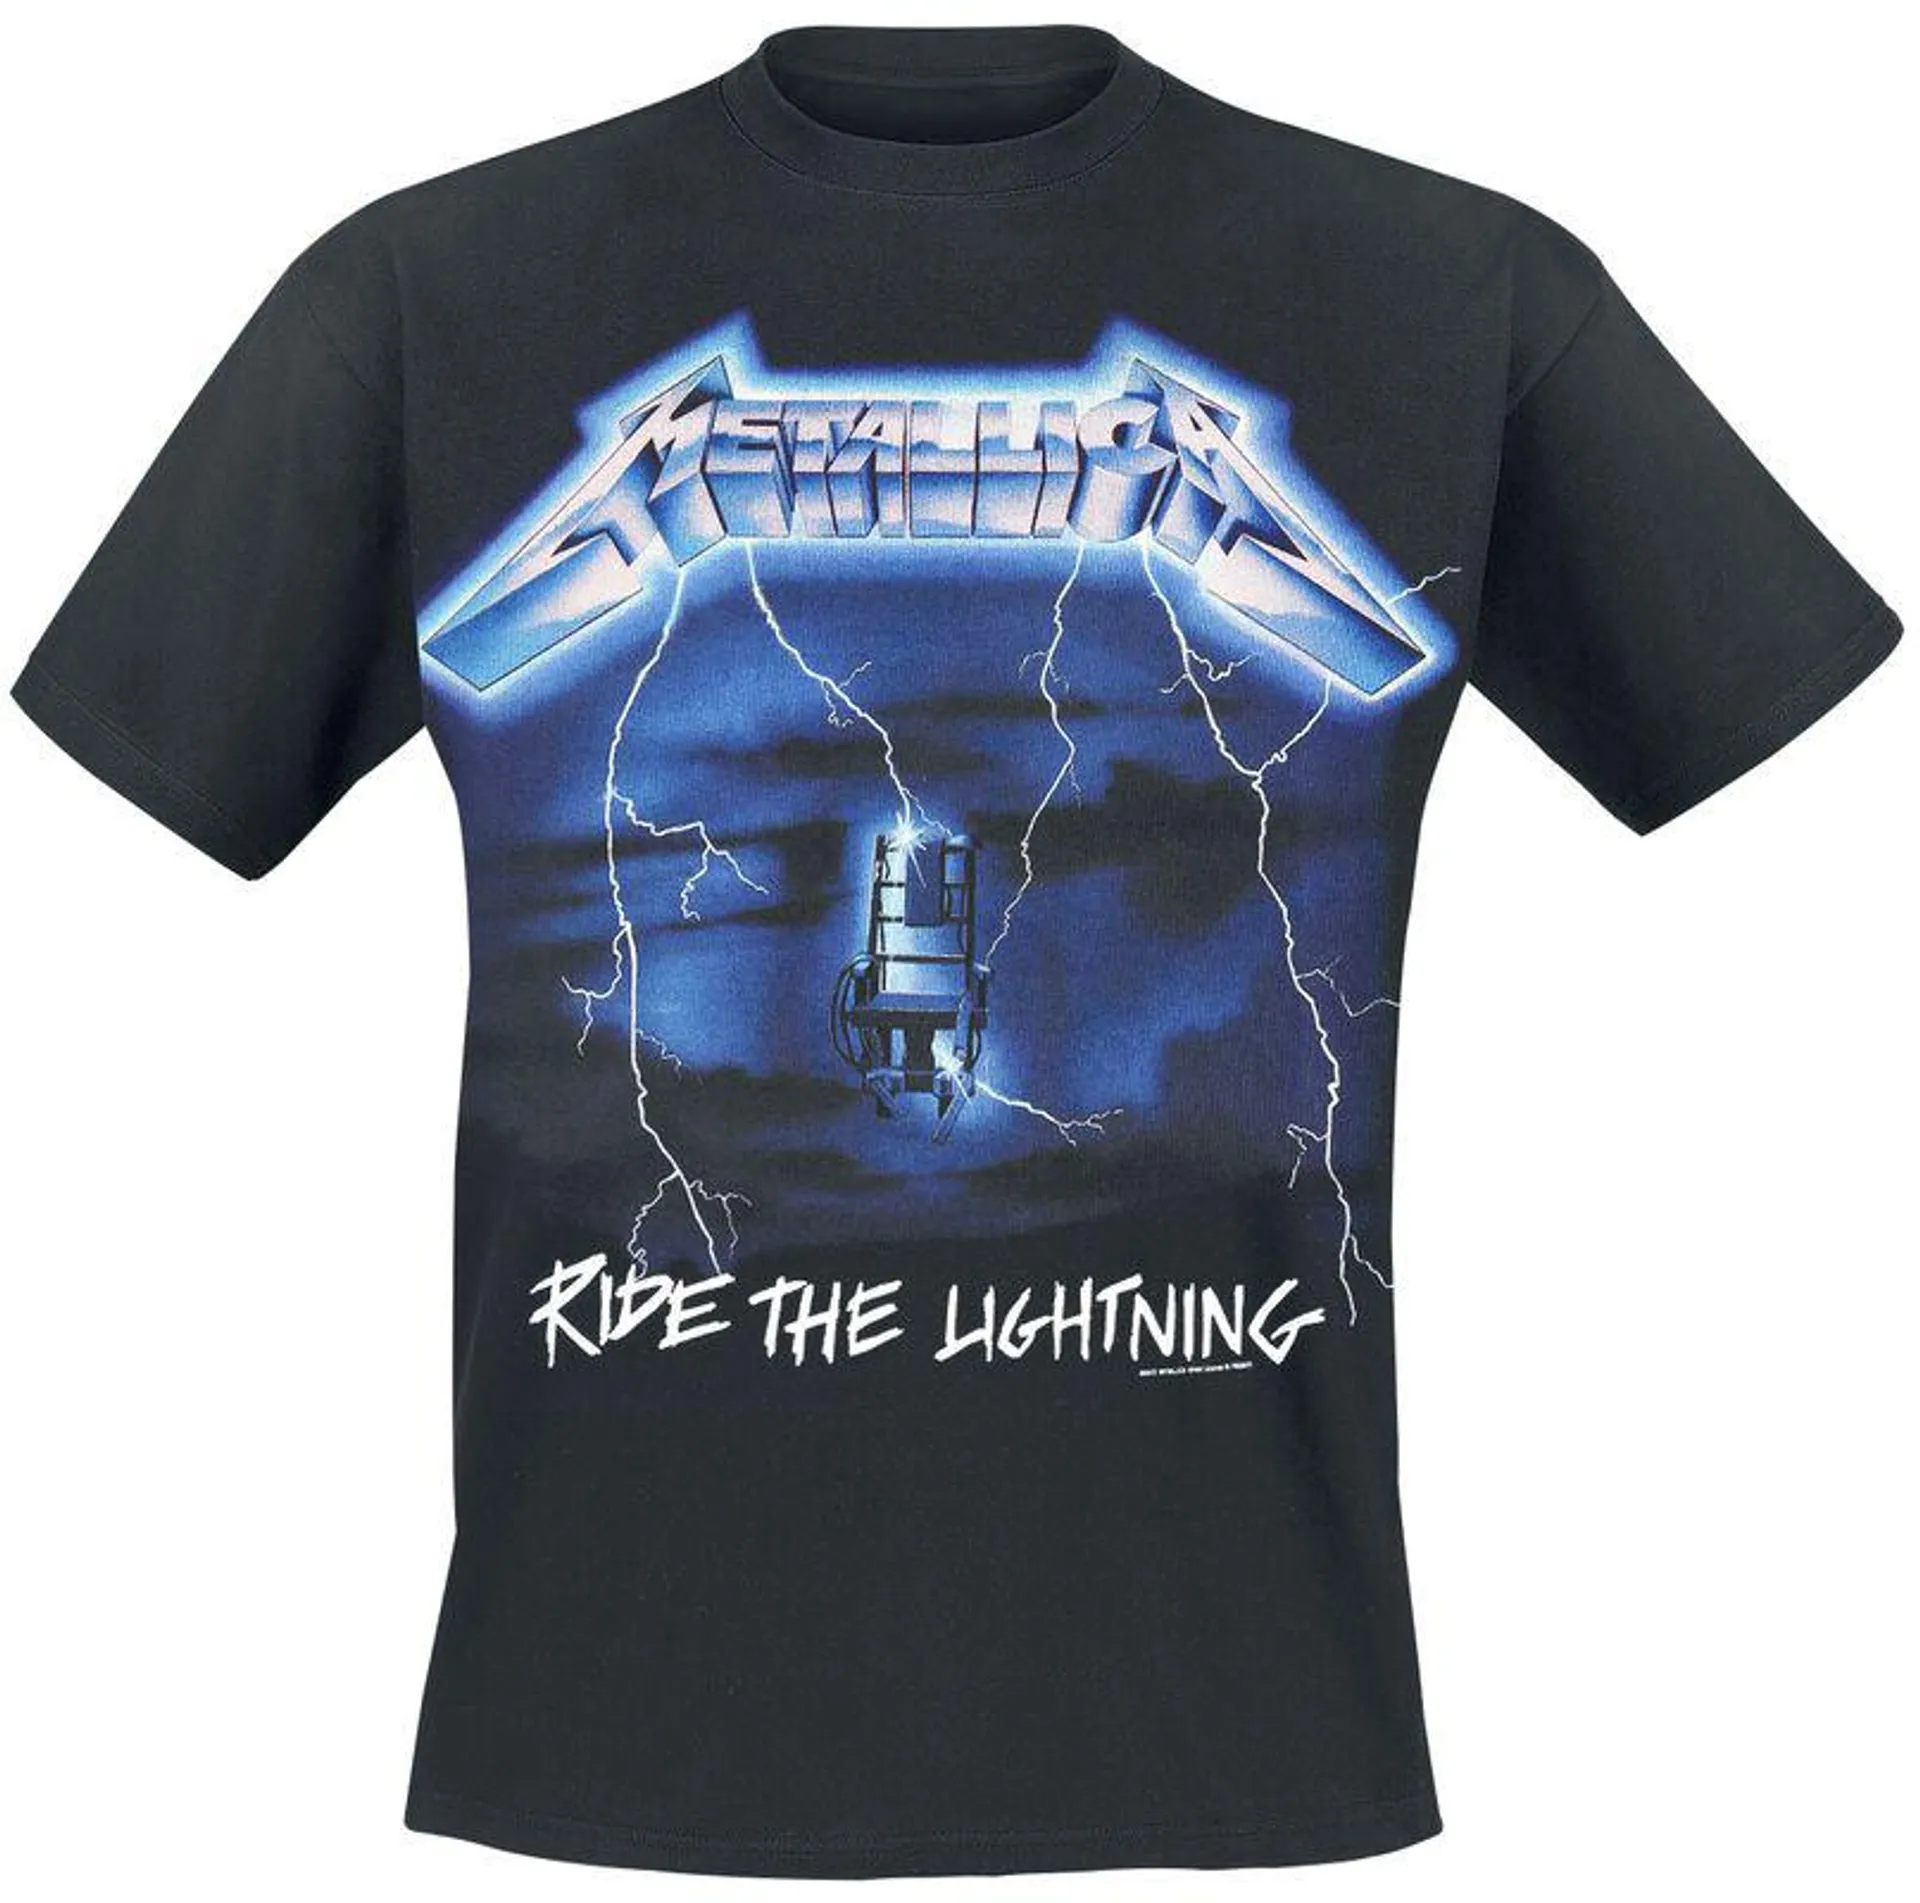 "Ride The Lightning" Camiseta Negro de Metallica